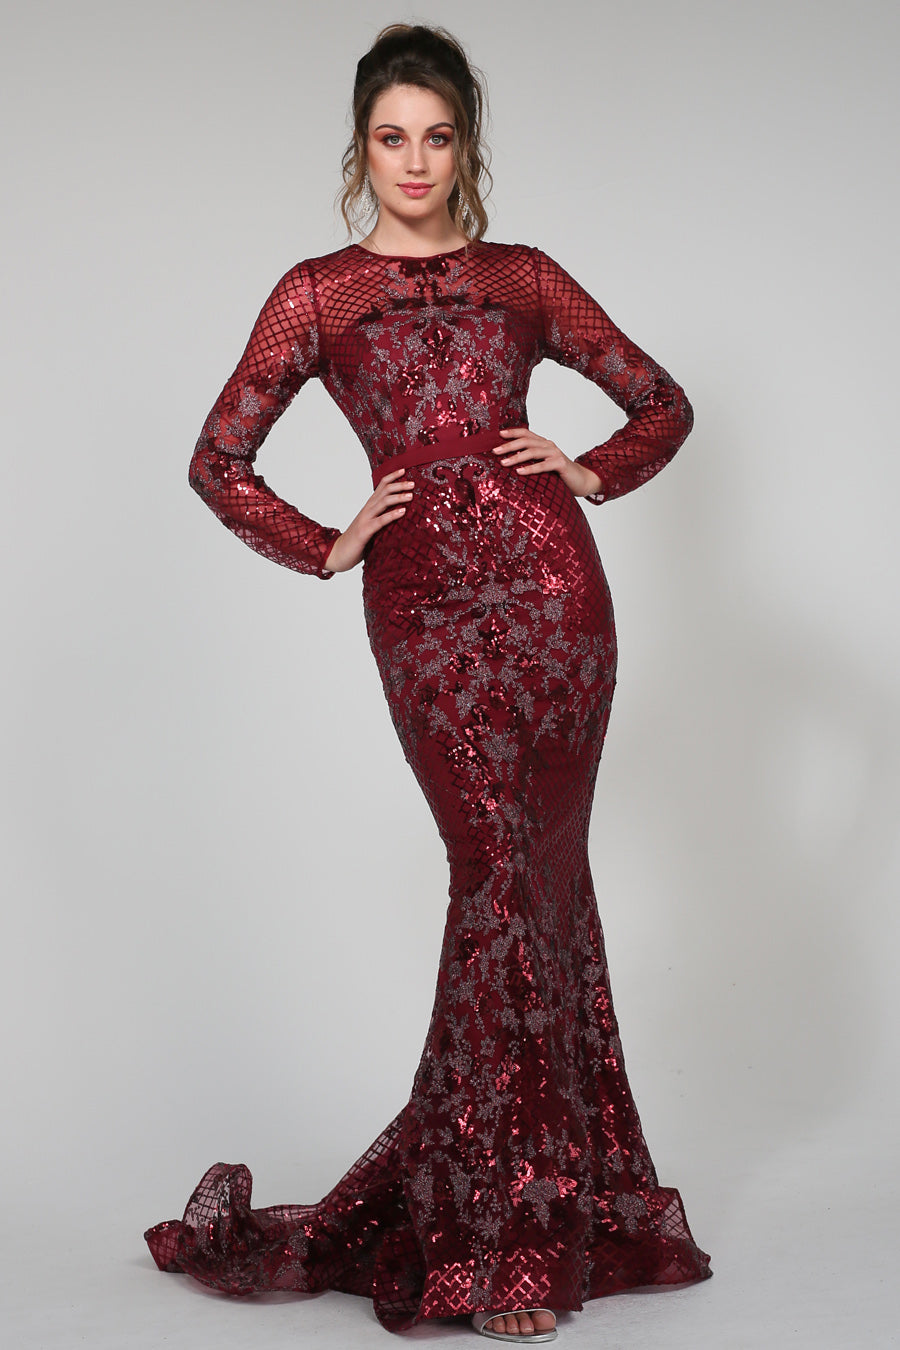 Tina Holly Couture TA139 Burgundy Sequin Long Sleeve Mermaid Formal Dress {vendor} AfterPay Humm ZipPay LayBuy Sezzle